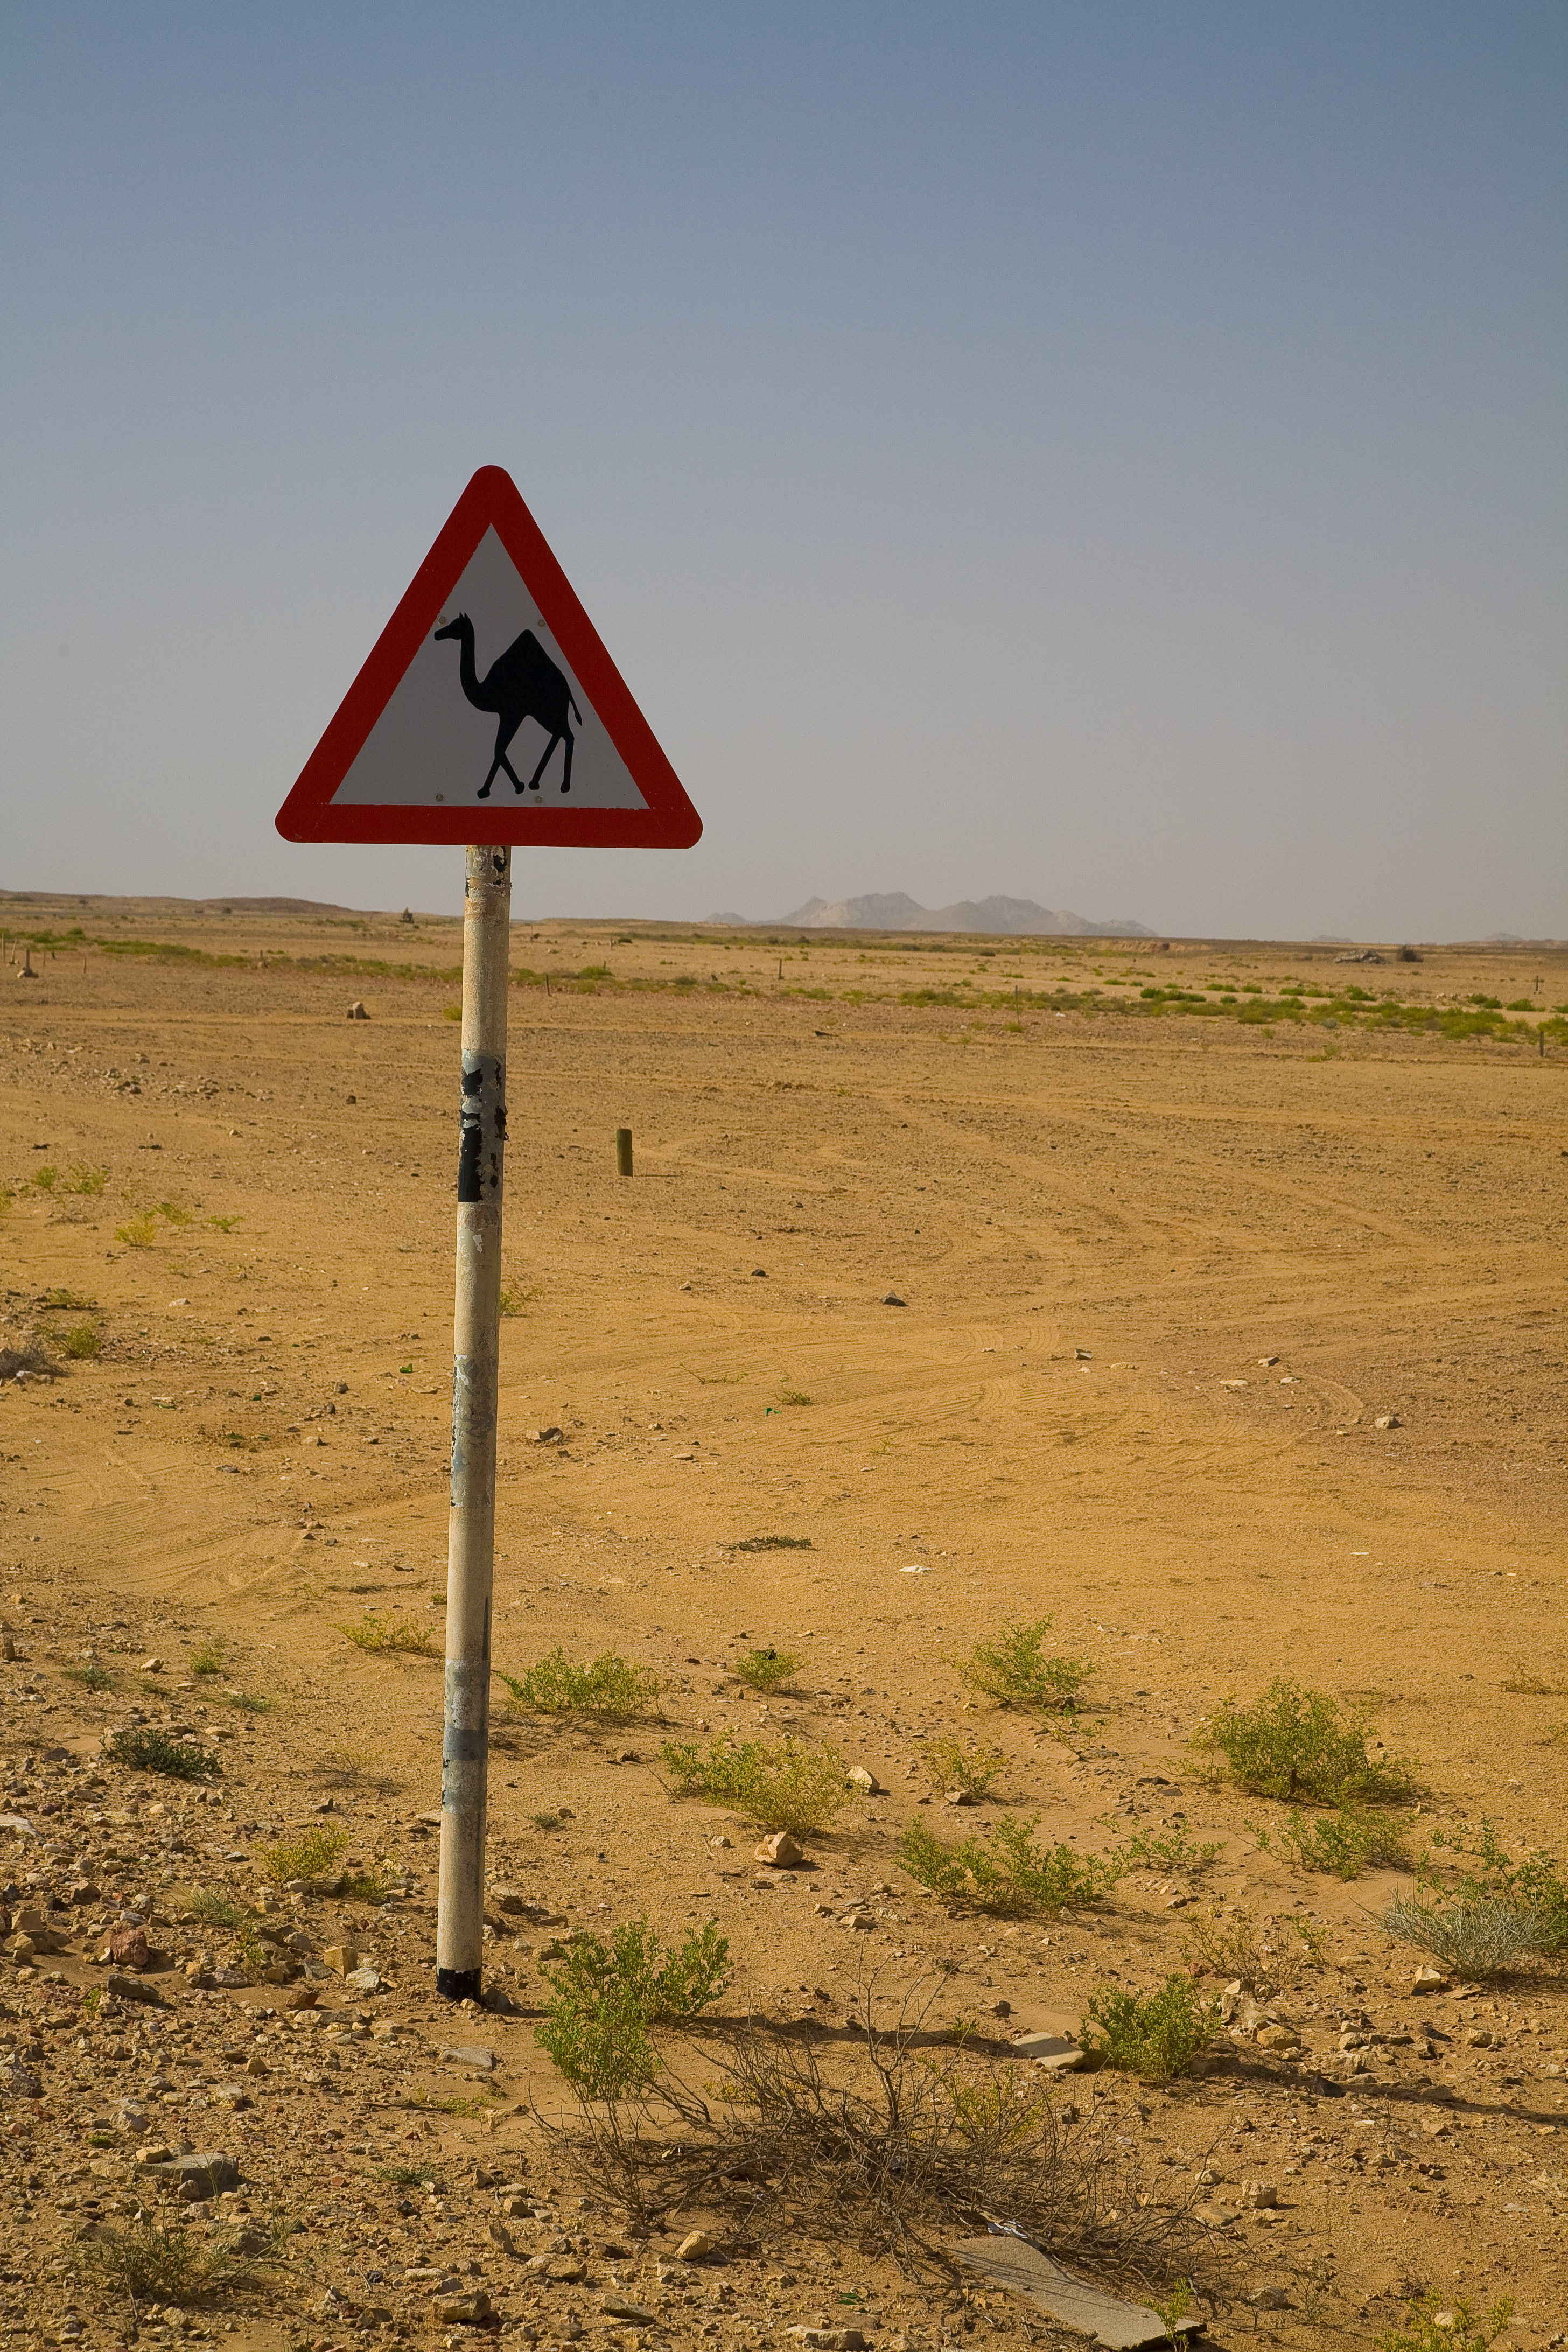 File:Oman camel sign.jpg - Wikimedia Commons